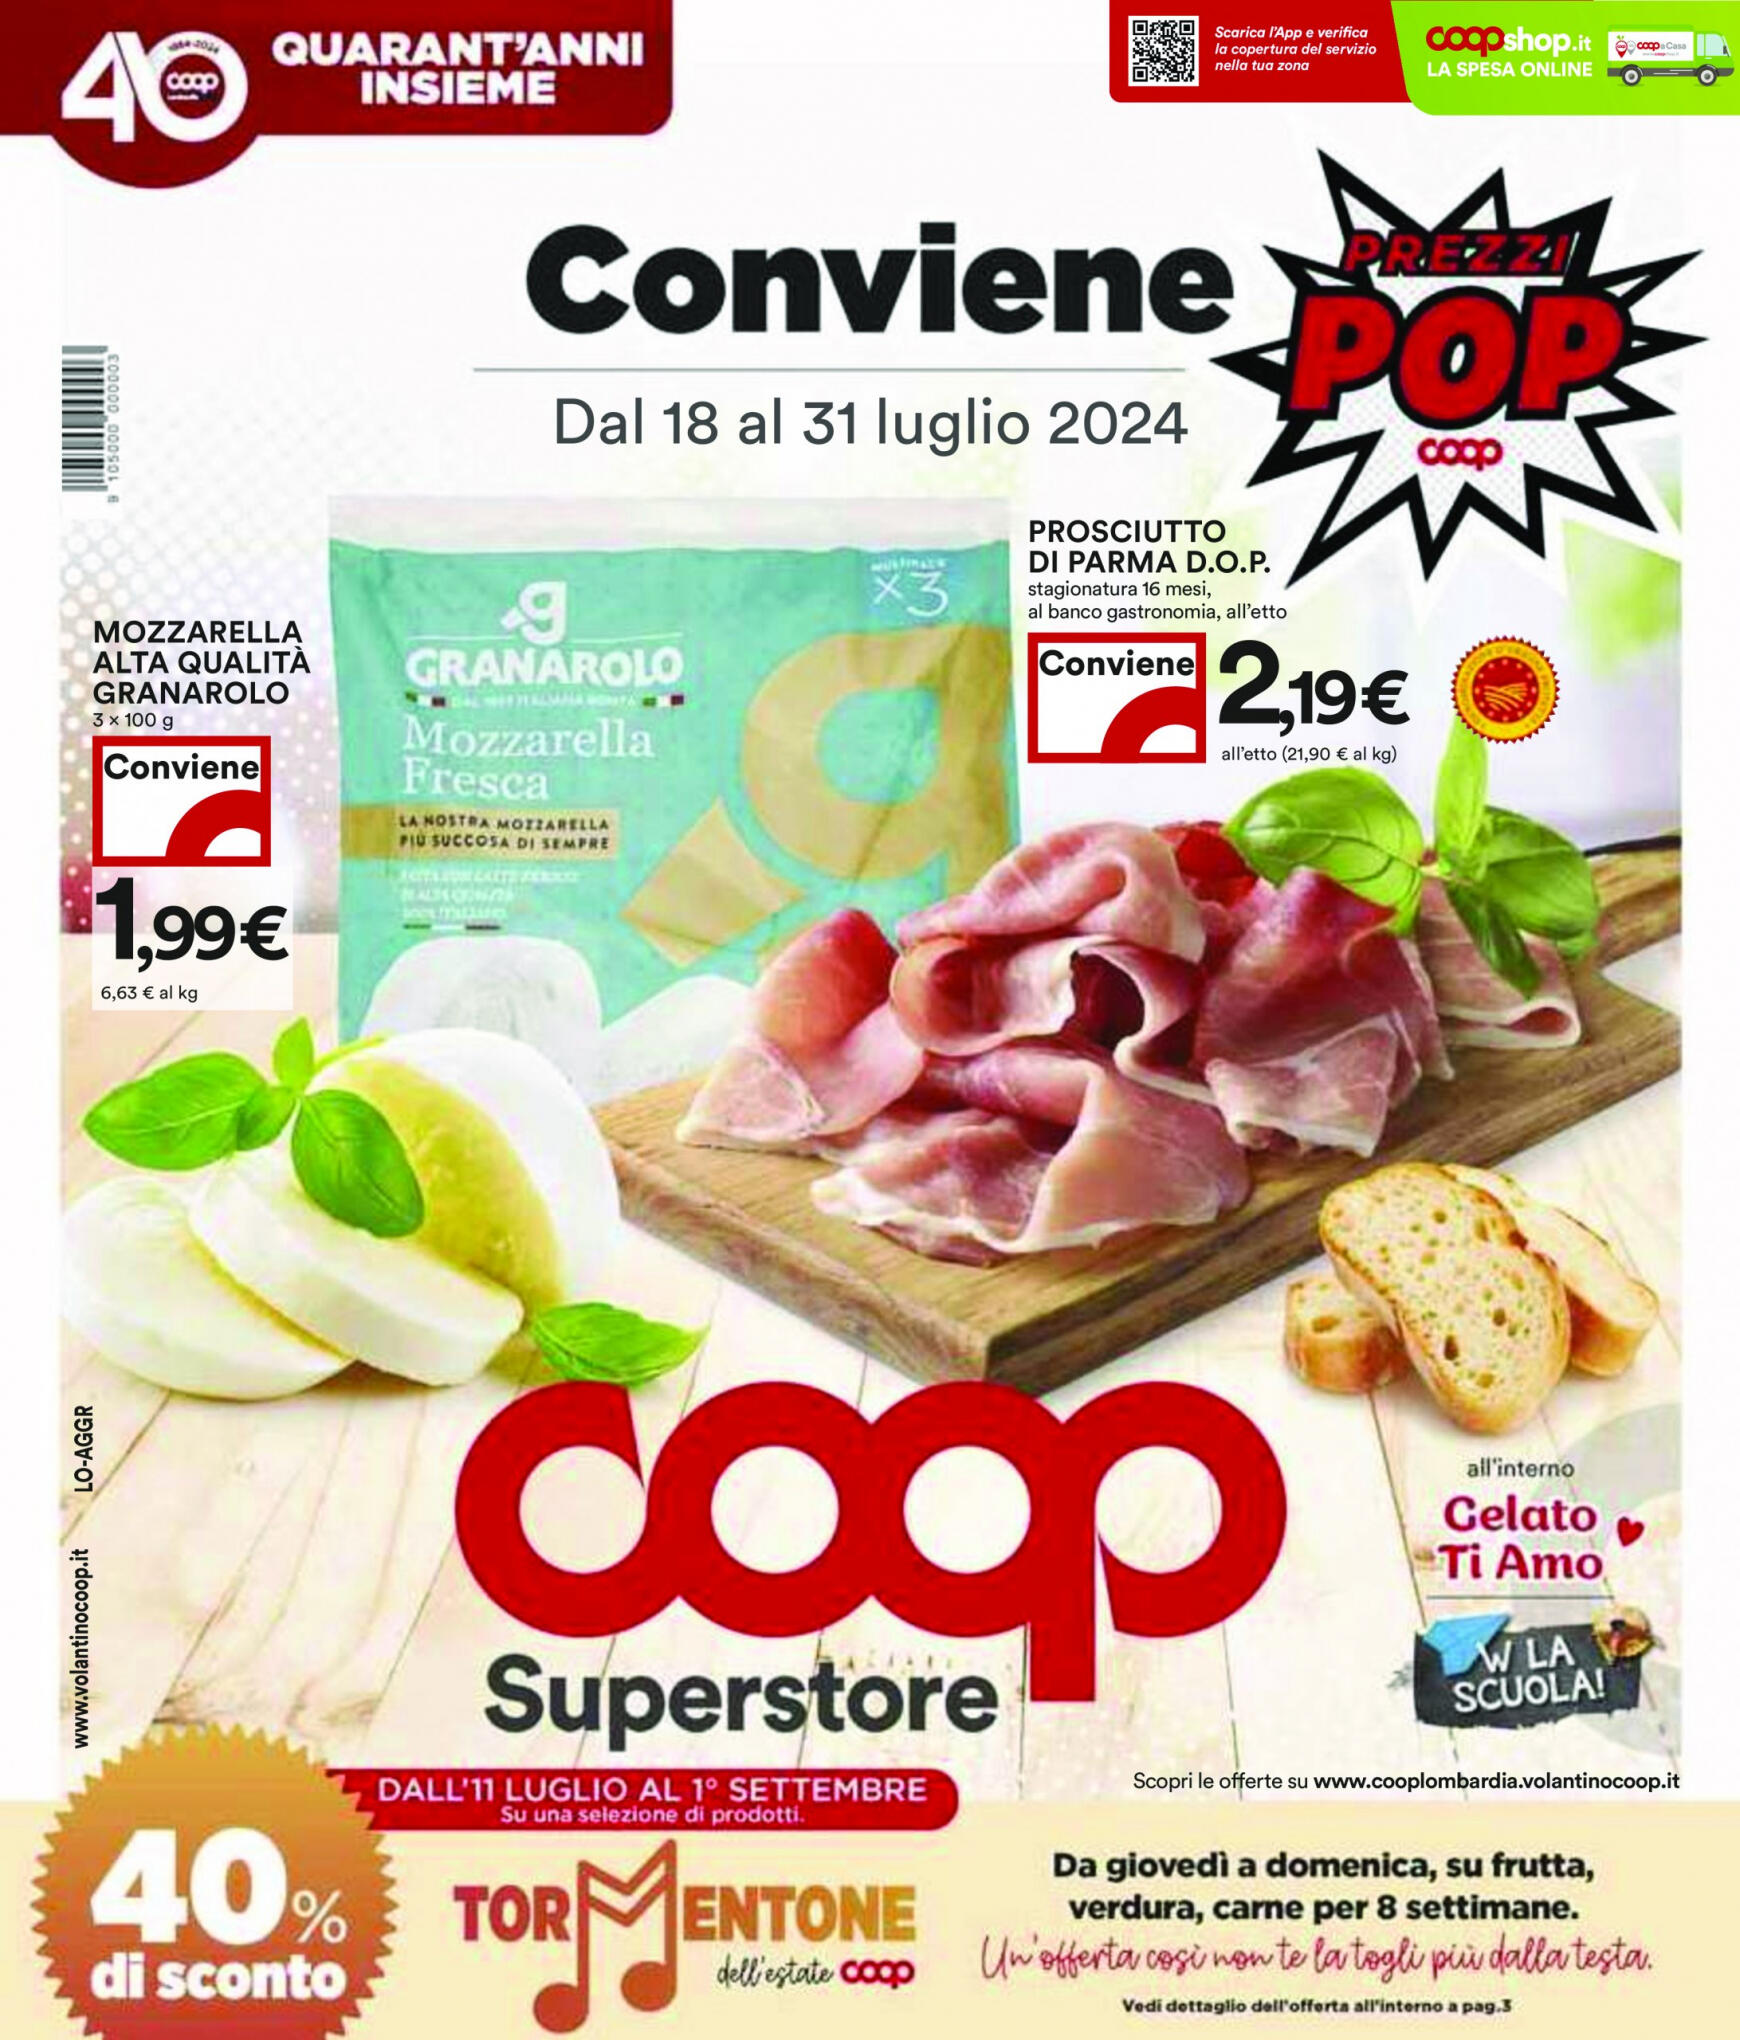 coop - Nuovo volantino Coop 18.07. - 31.07.